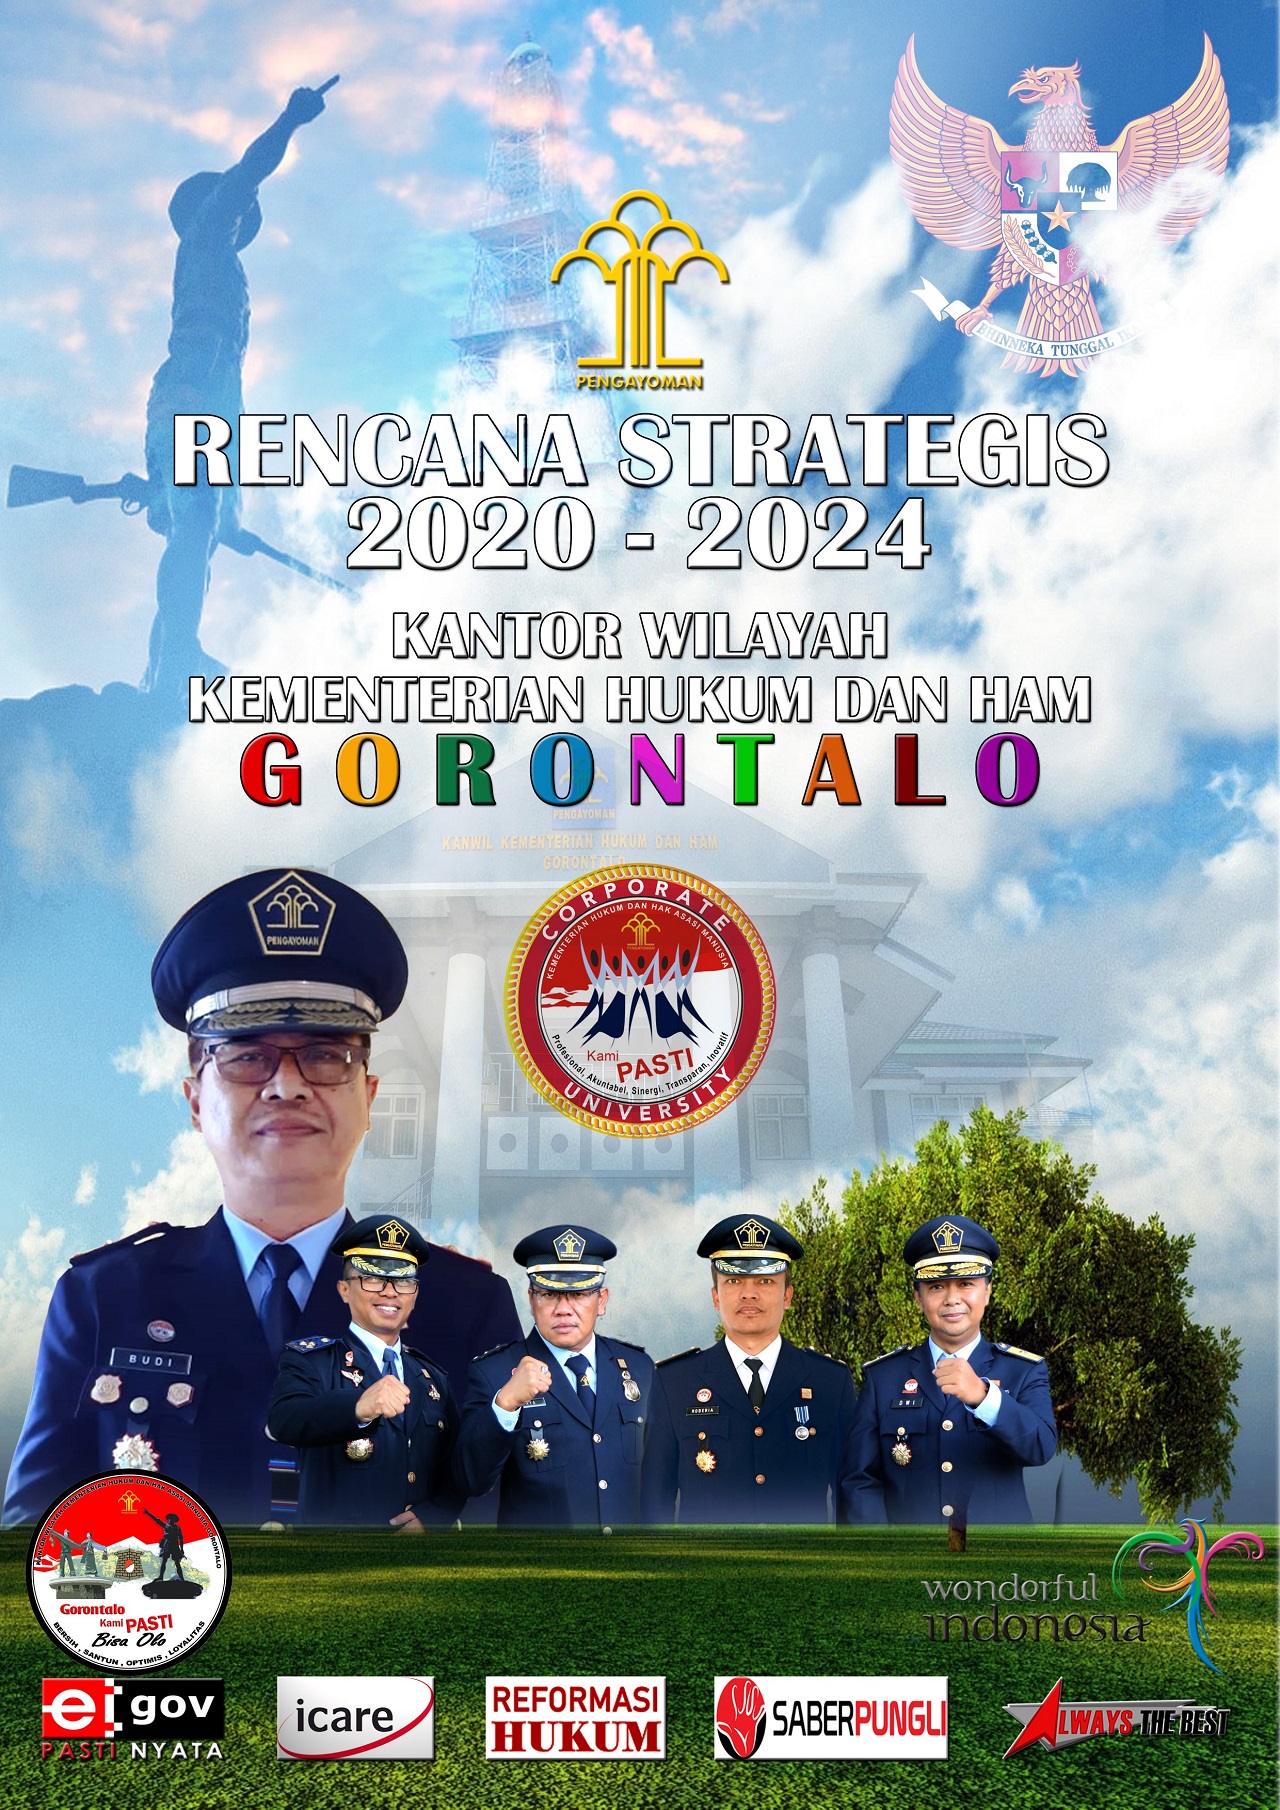 Renstra Kanwil Gorontalo 2020 2024 page1 image1